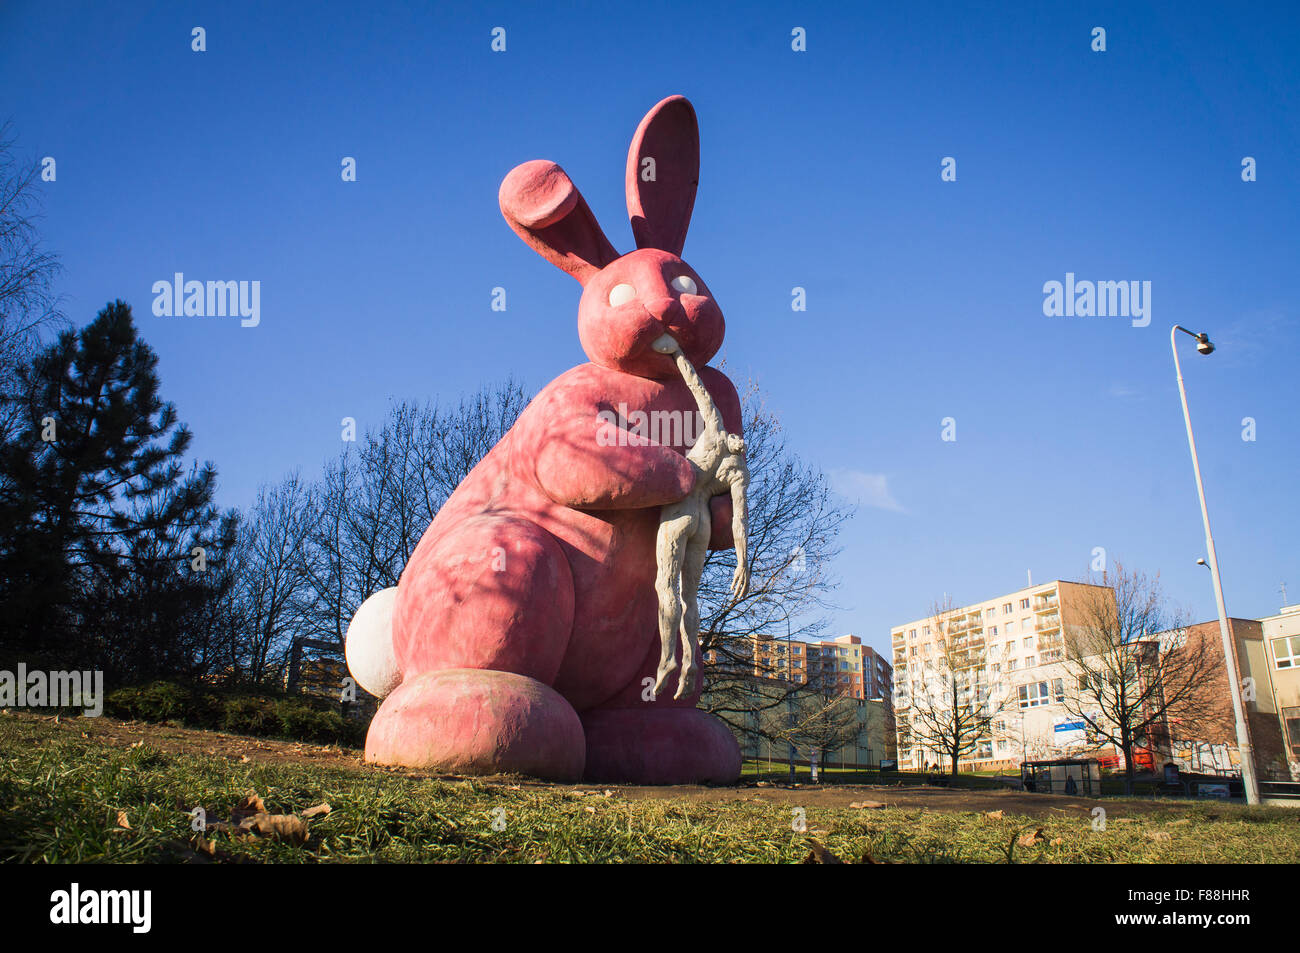 giant pink rabbit eating a headless human body statue Stock Photo - Alamy